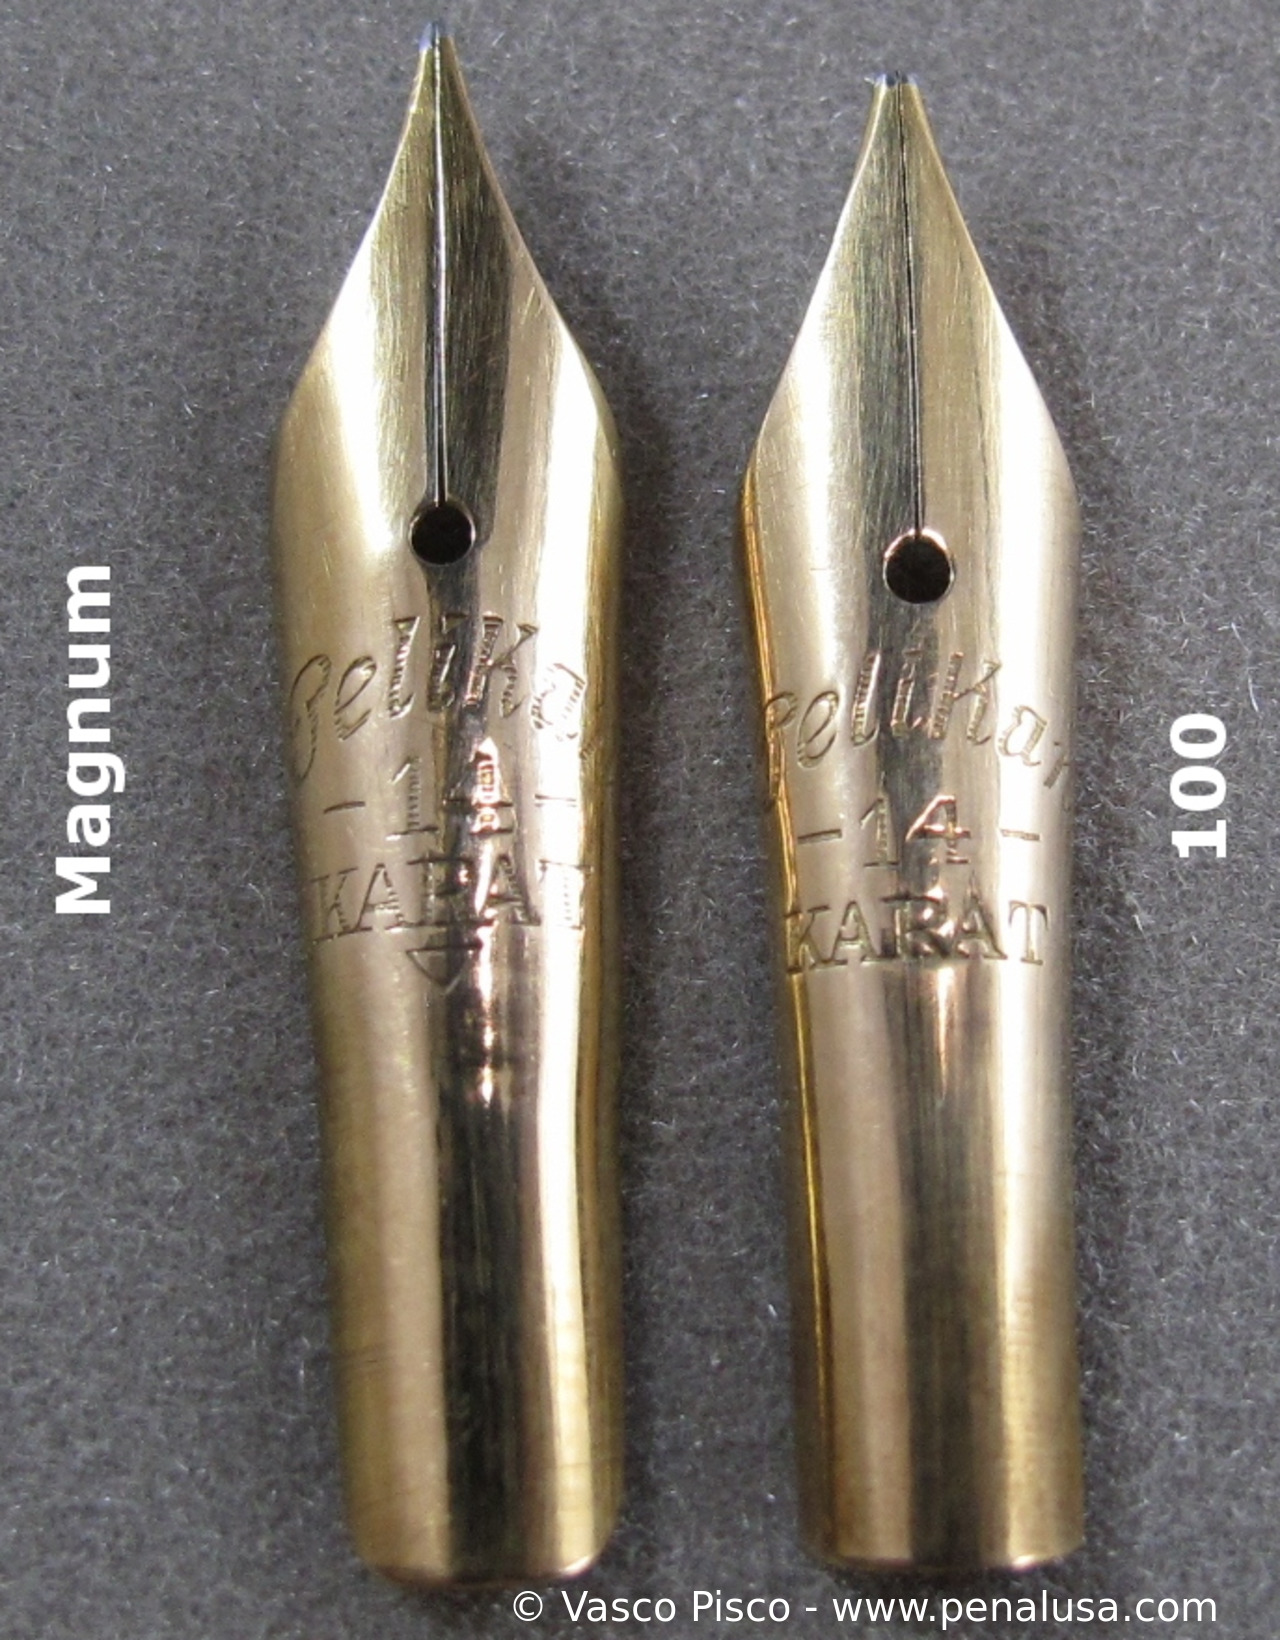 Vergleich der Federn des Pelikan Magnum vs. Pelikan 100